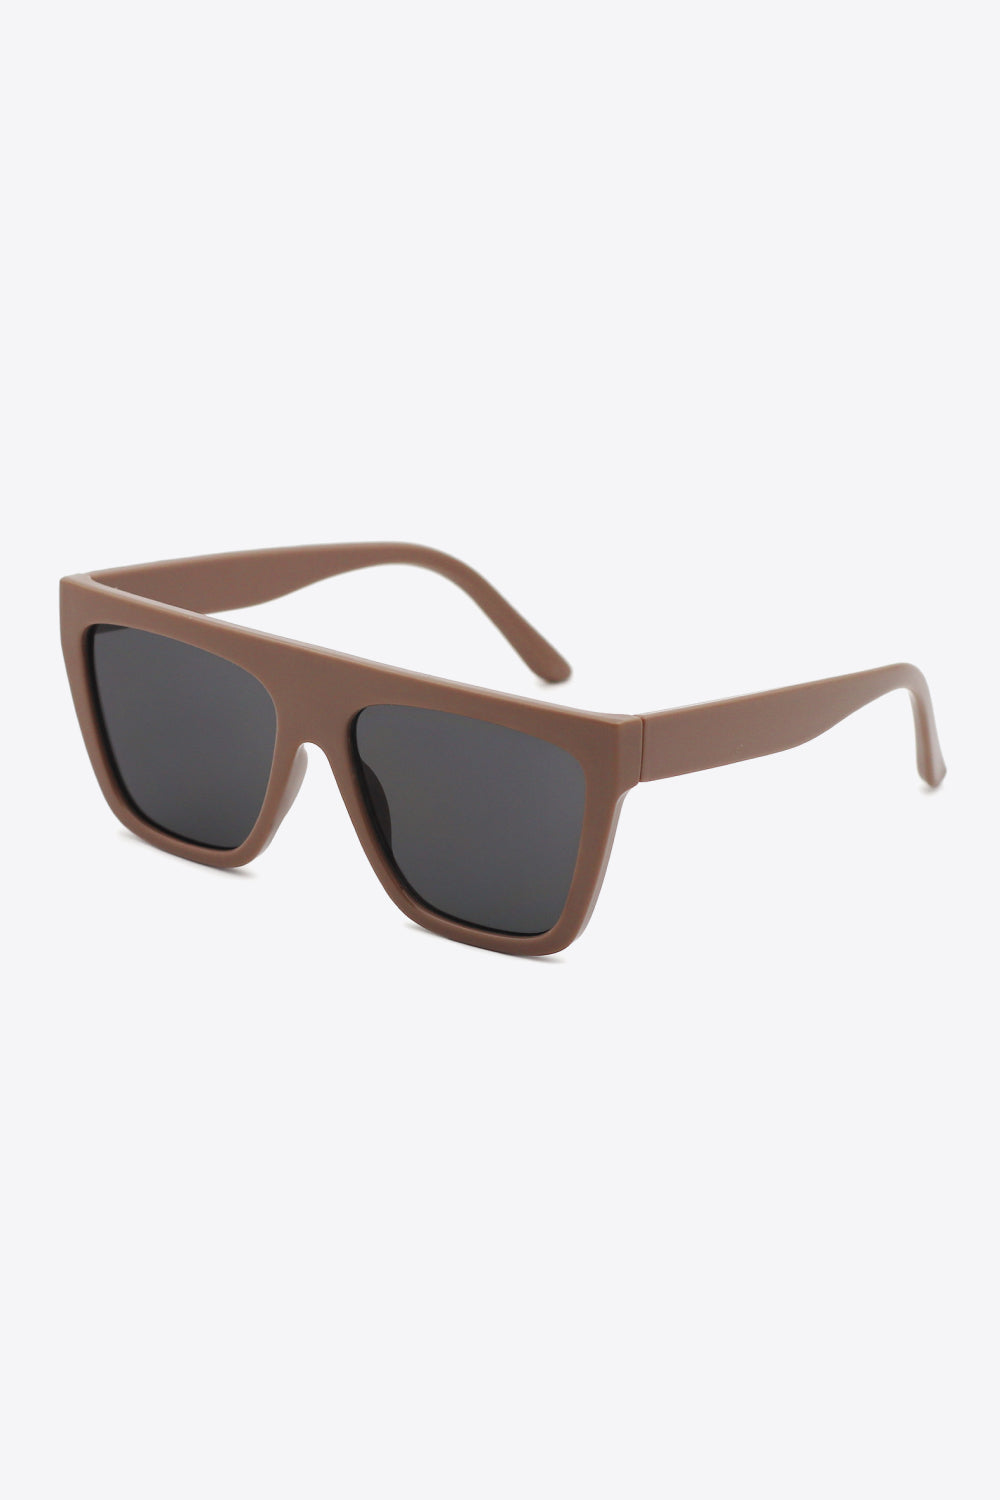 White Smoke UV400 Polycarbonate Wayfarer Sunglasses Sentient Beauty Fashions Apparel & Accessories